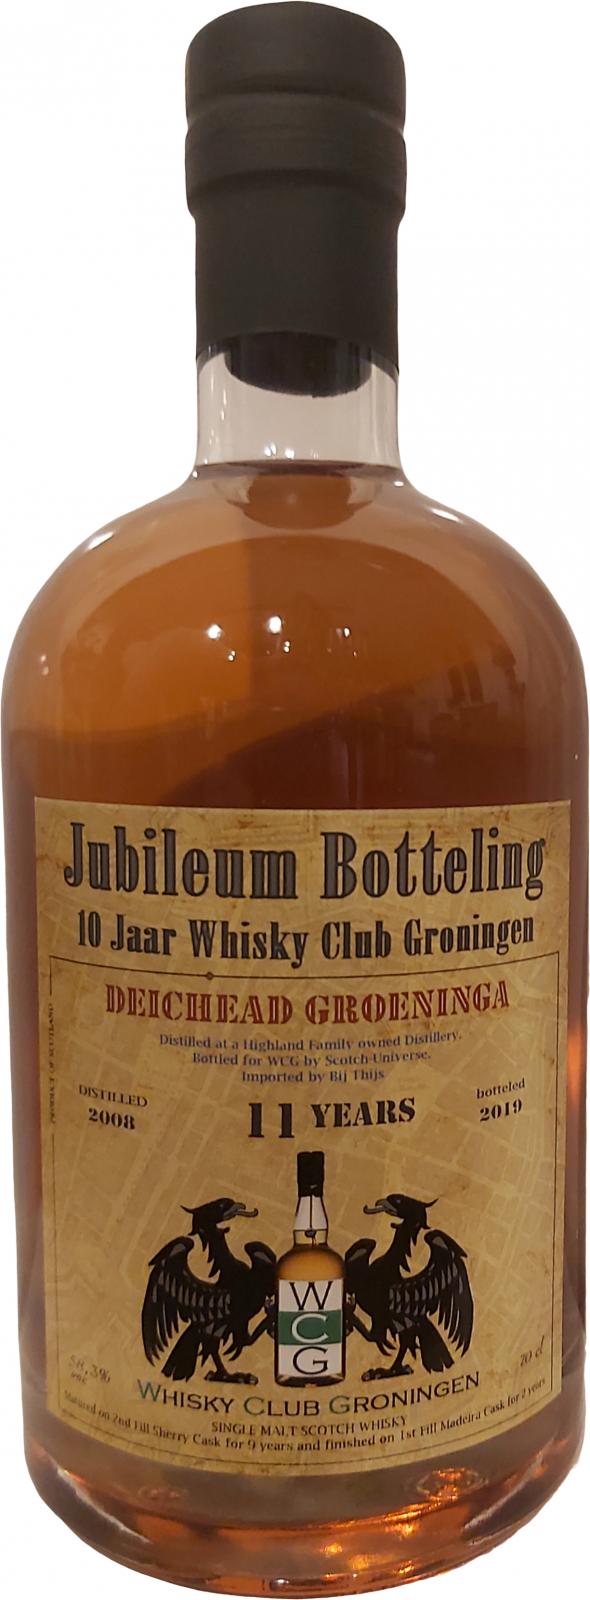 Single Malt Scotch Whisky 2008 WCG Jubileum Botteling 58.3% 700ml